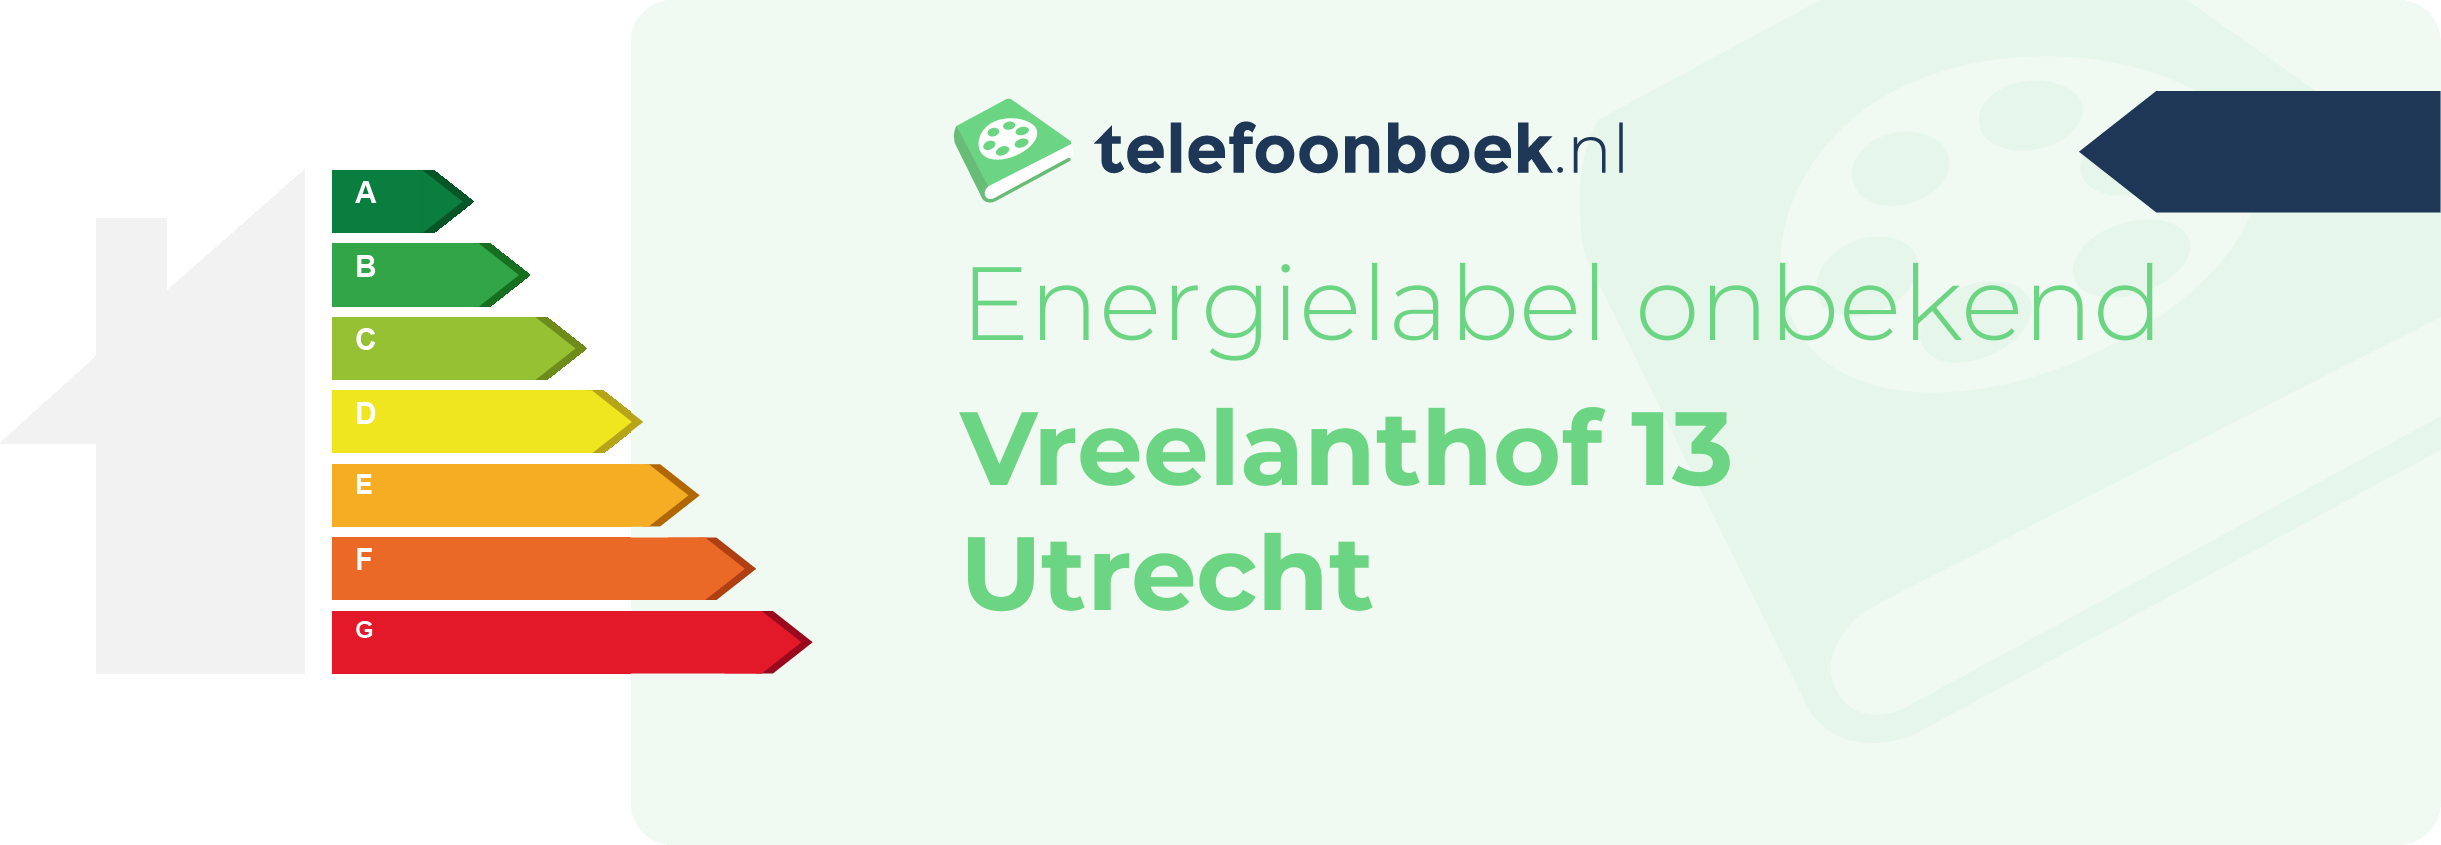 Energielabel Vreelanthof 13 Utrecht